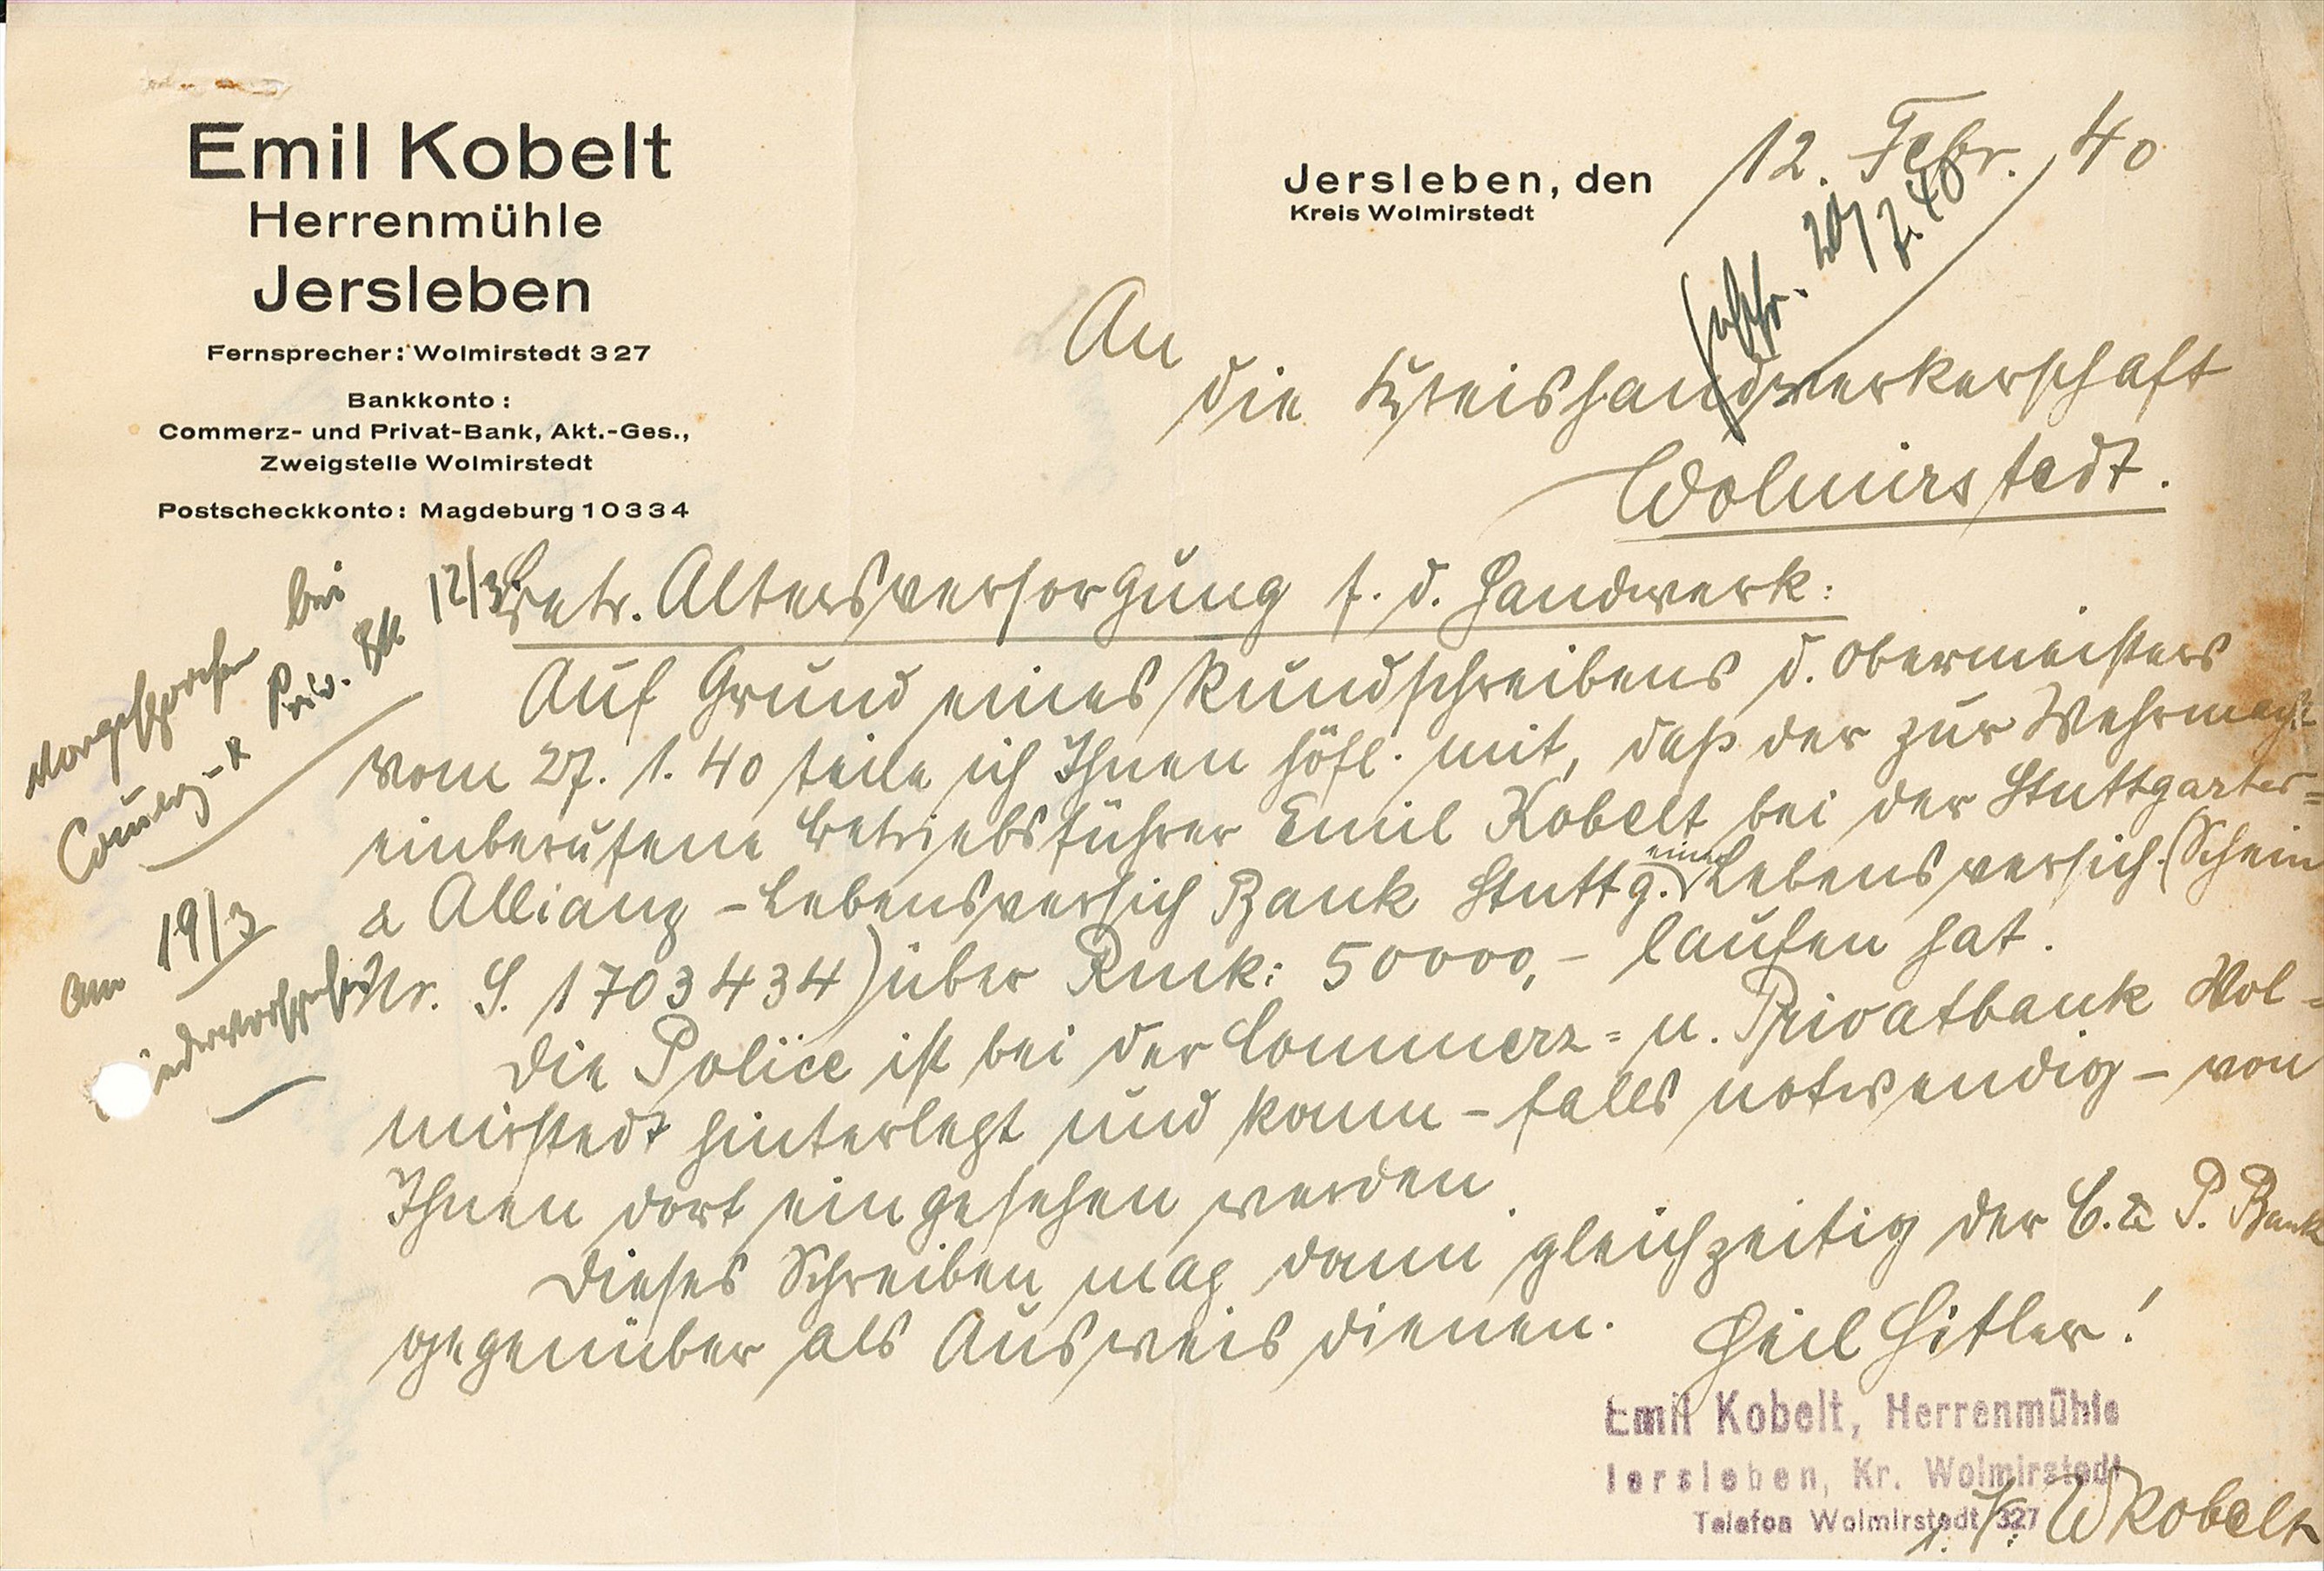 Emil Koblet, Herrenmühle Jersleben, Altersversorgung, 1940 (Museum Wolmirstedt RR-F)